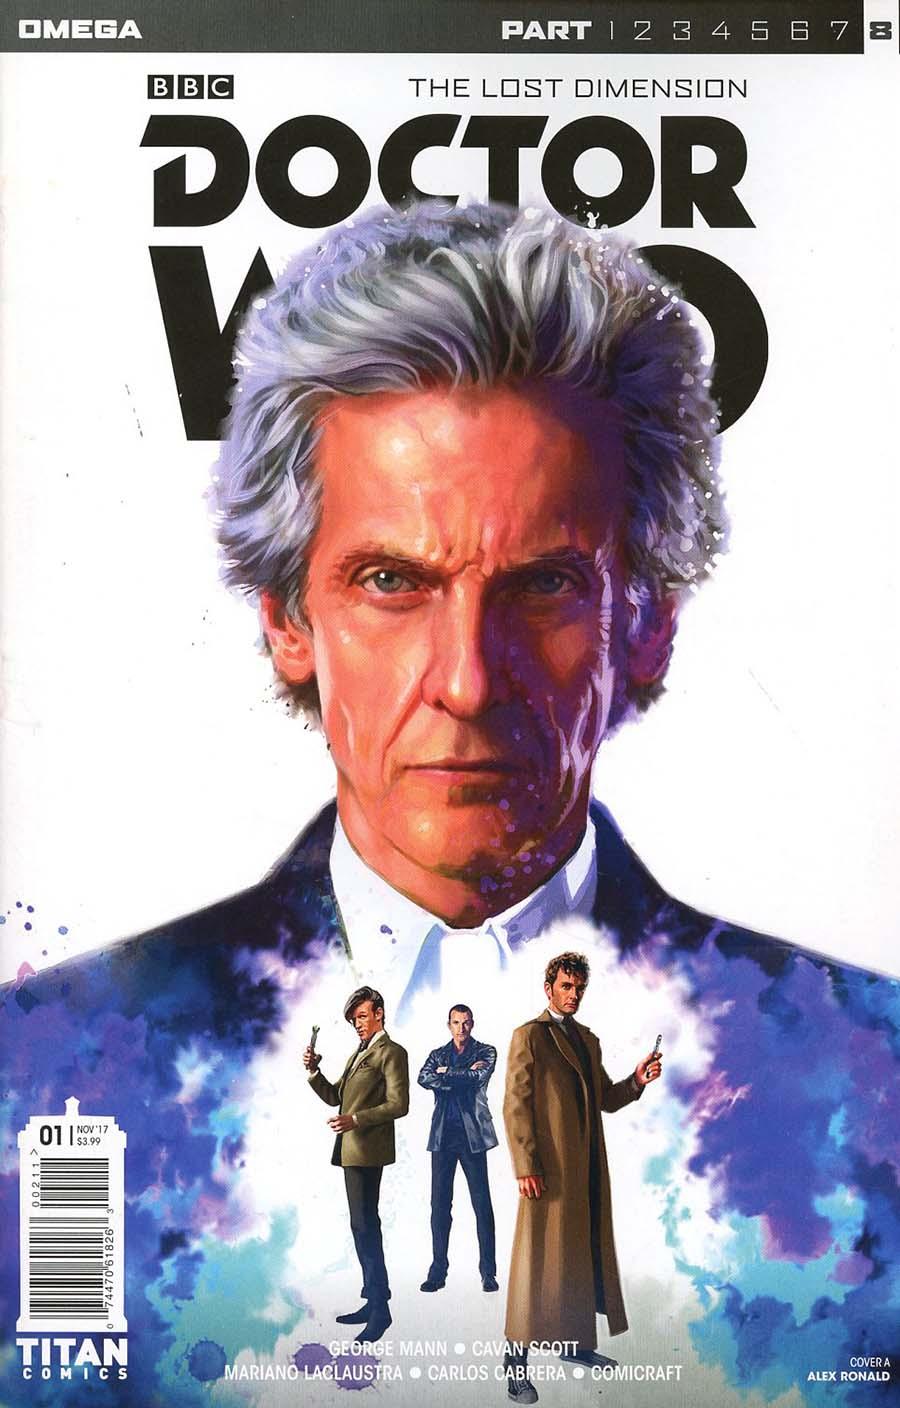 Doctor Who Lost Dimension Omega Vol. 1 #1